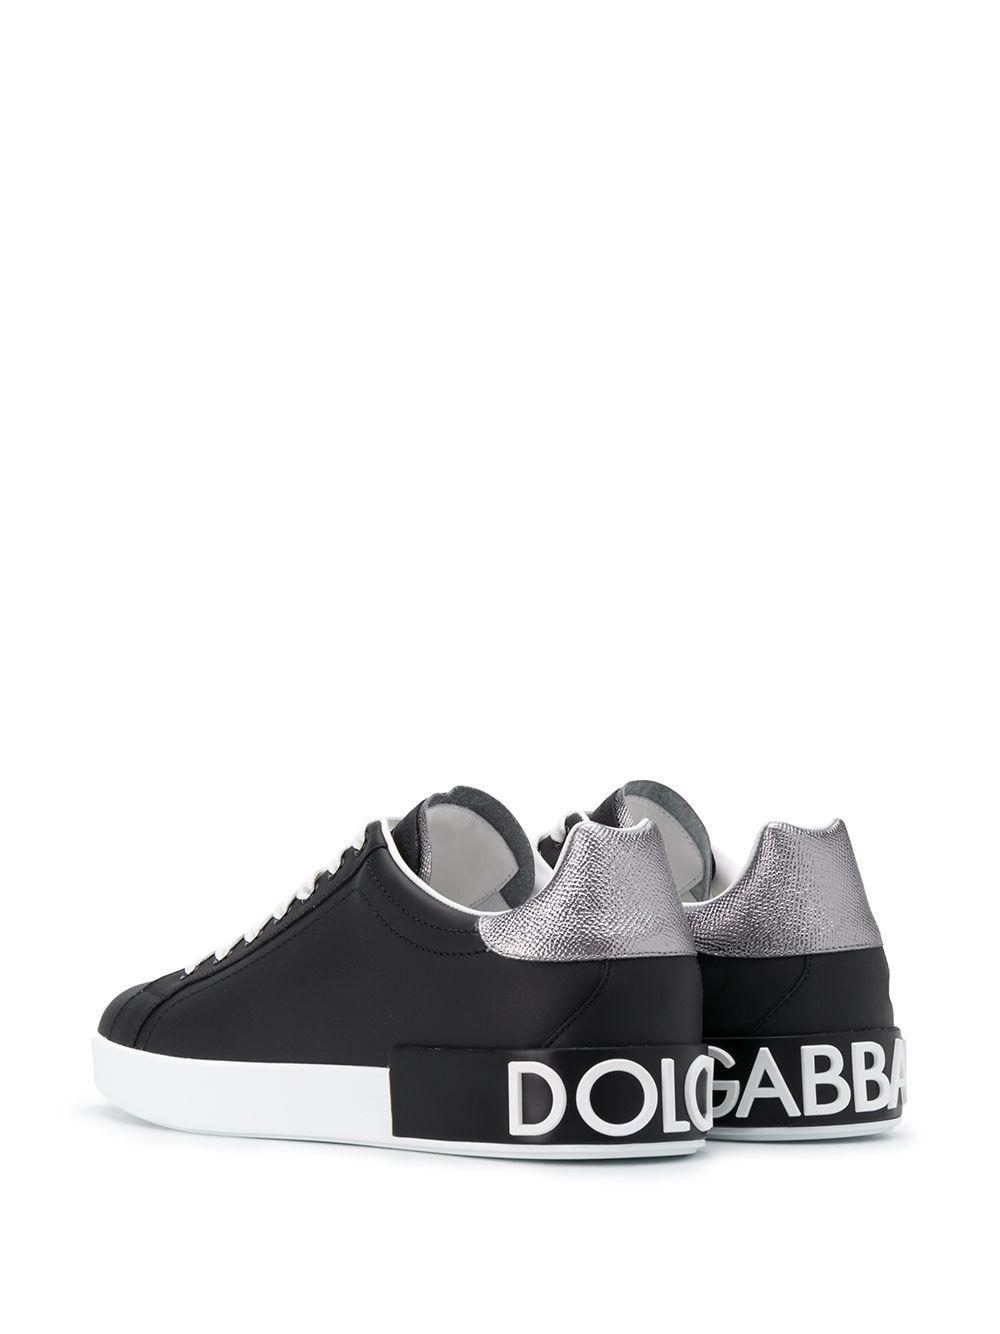 Dolce & Gabbana Leather Classic Portofino Sneakers in Black for Men - Lyst